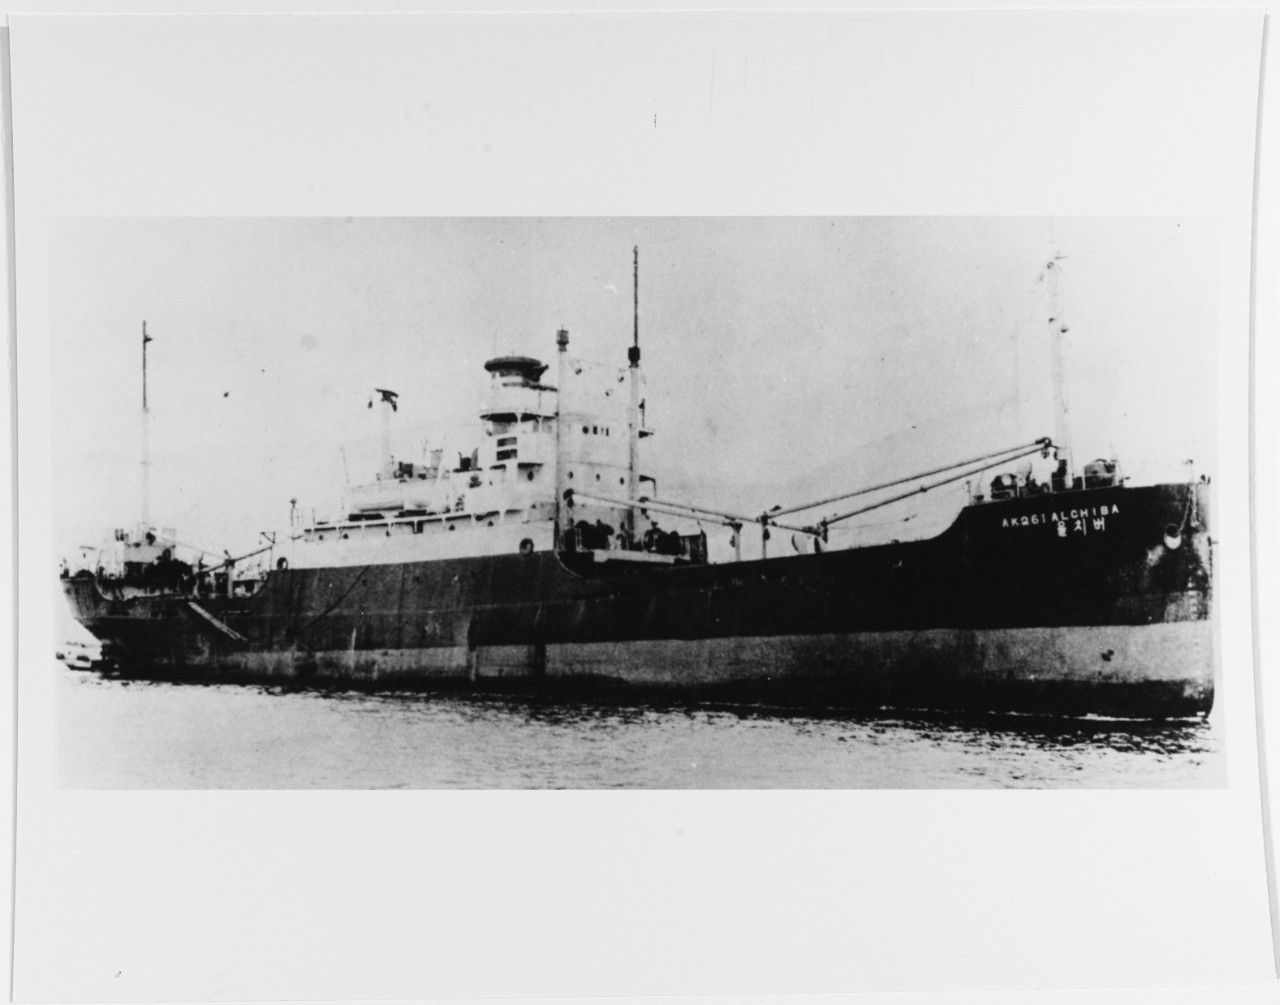 USS ALCHIBA (AK-261)